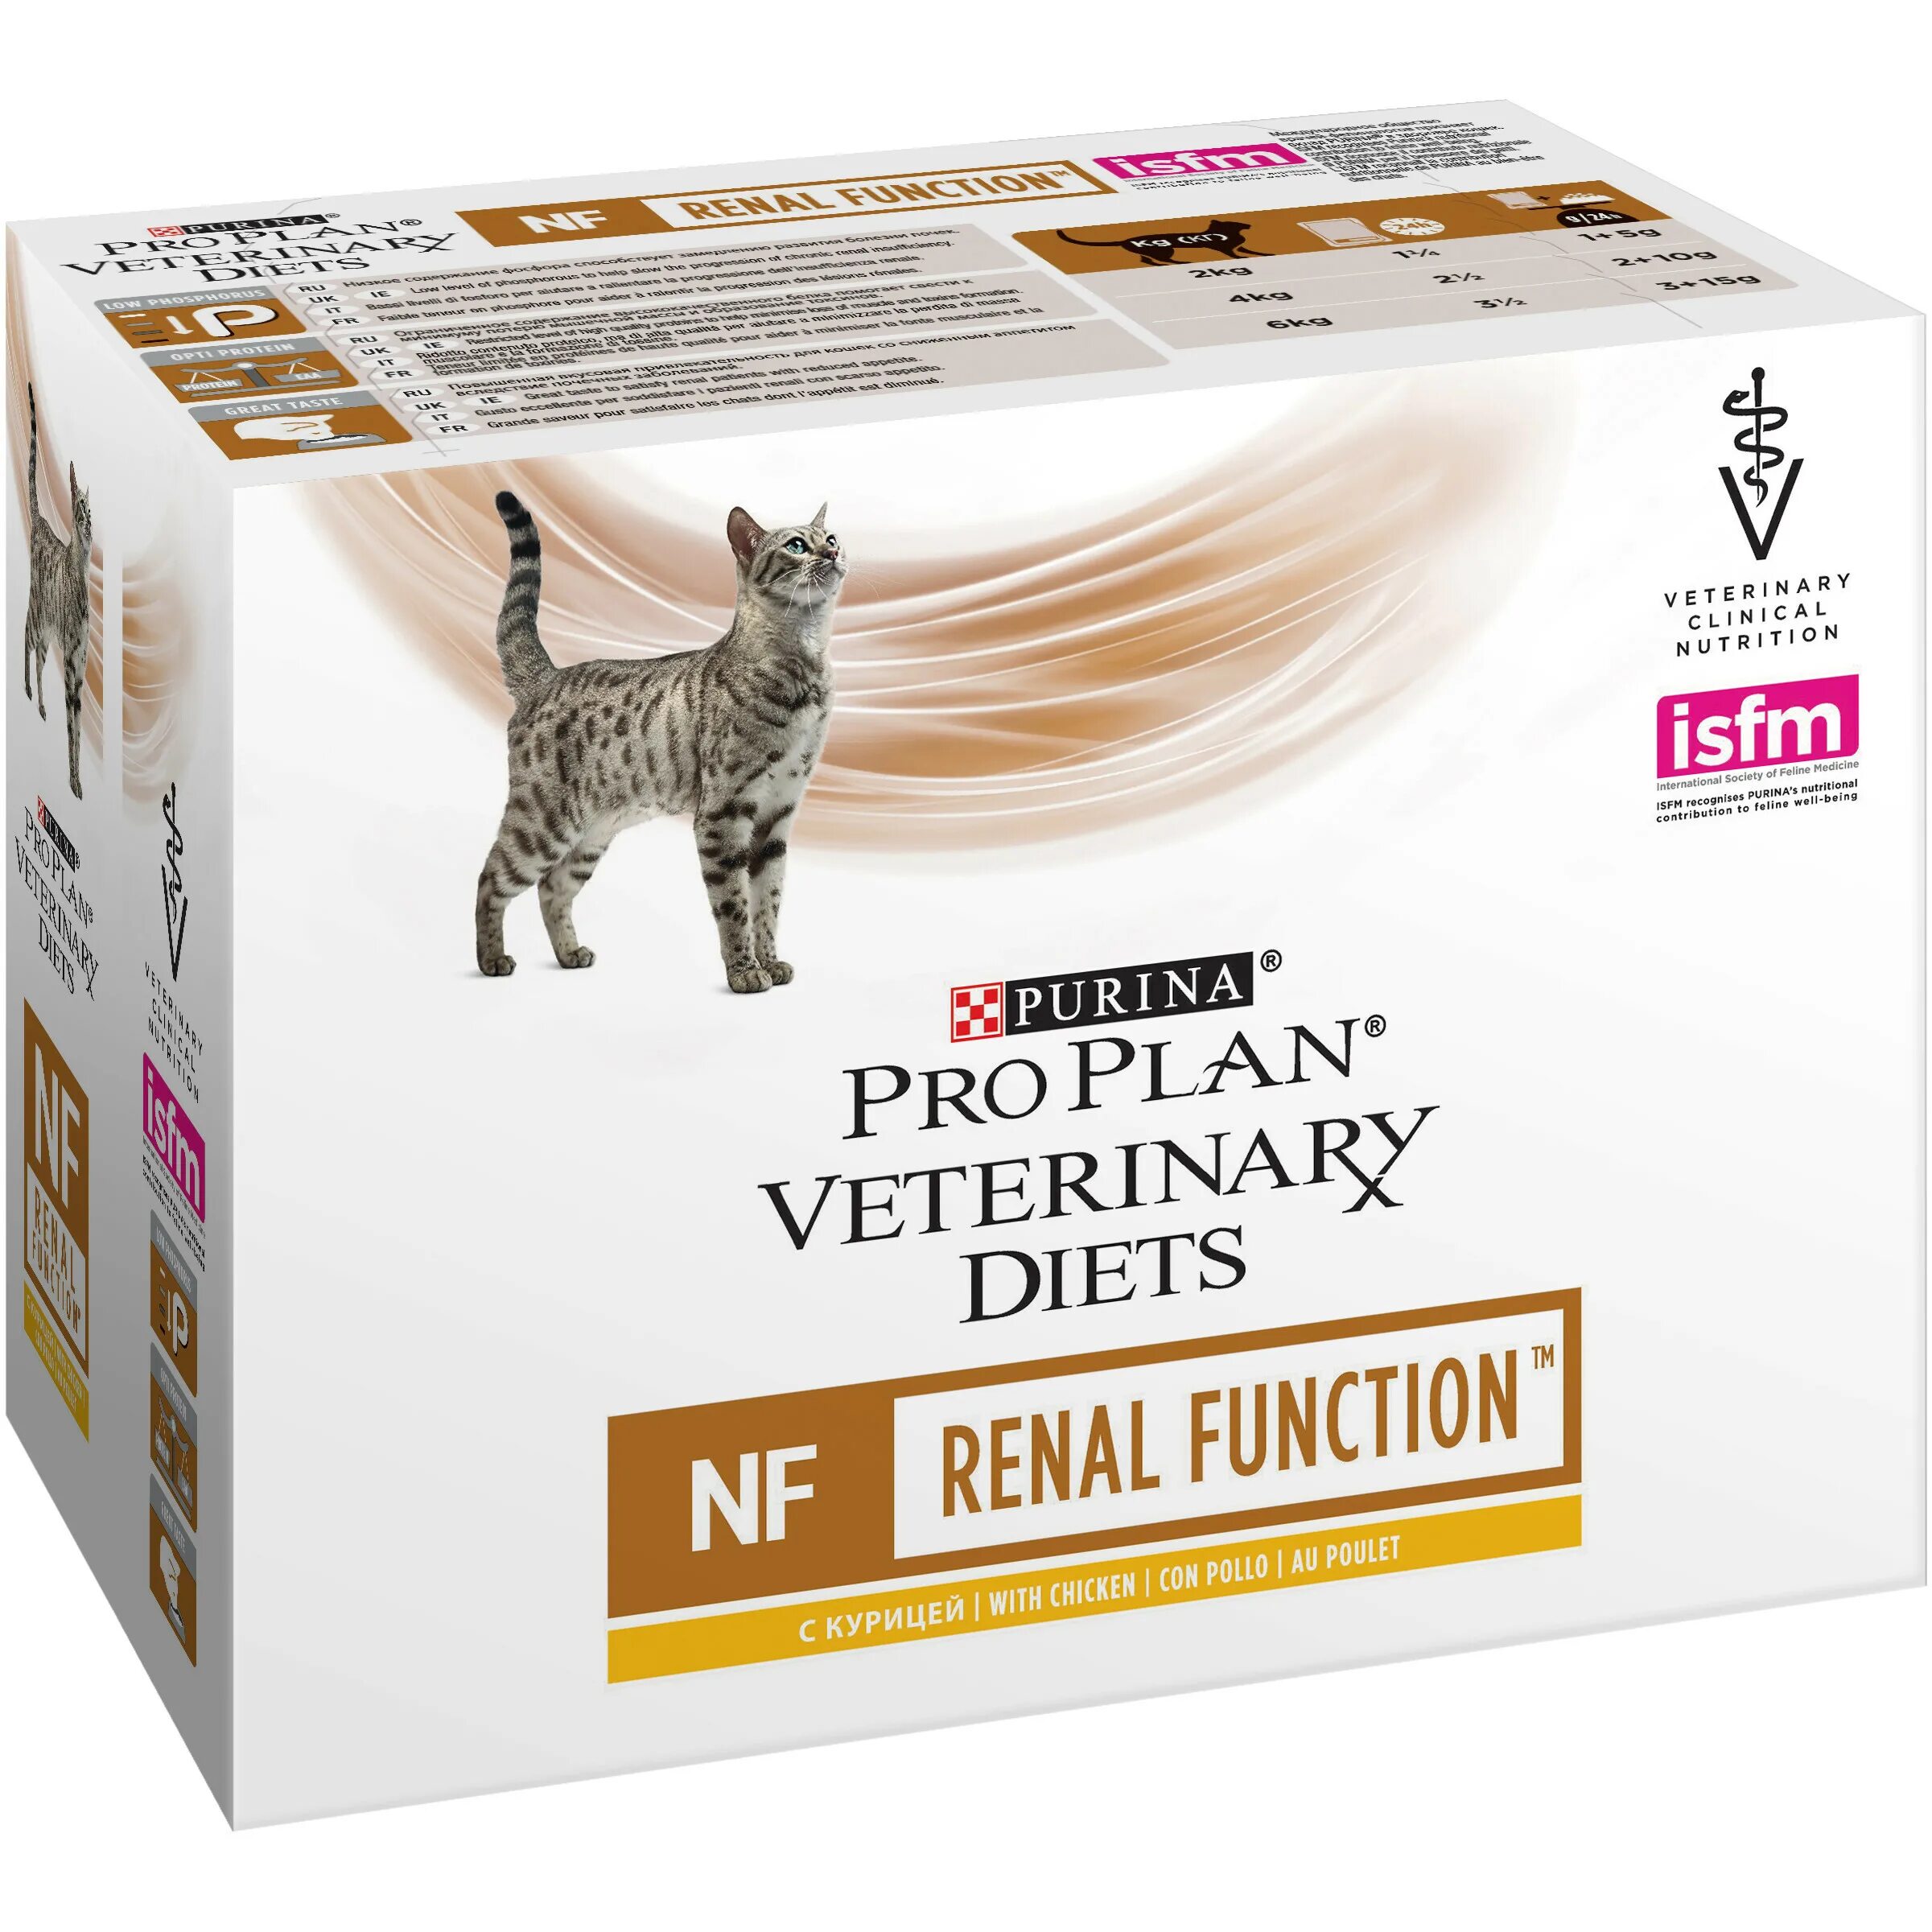 Корм Пурина НФ Ренал для кошек. Purina Pro Plan Veterinary Diets ur Urinary. Проплан renal function корм для кошек. Purina Pro Plan renal для кошек. Pro plan почки